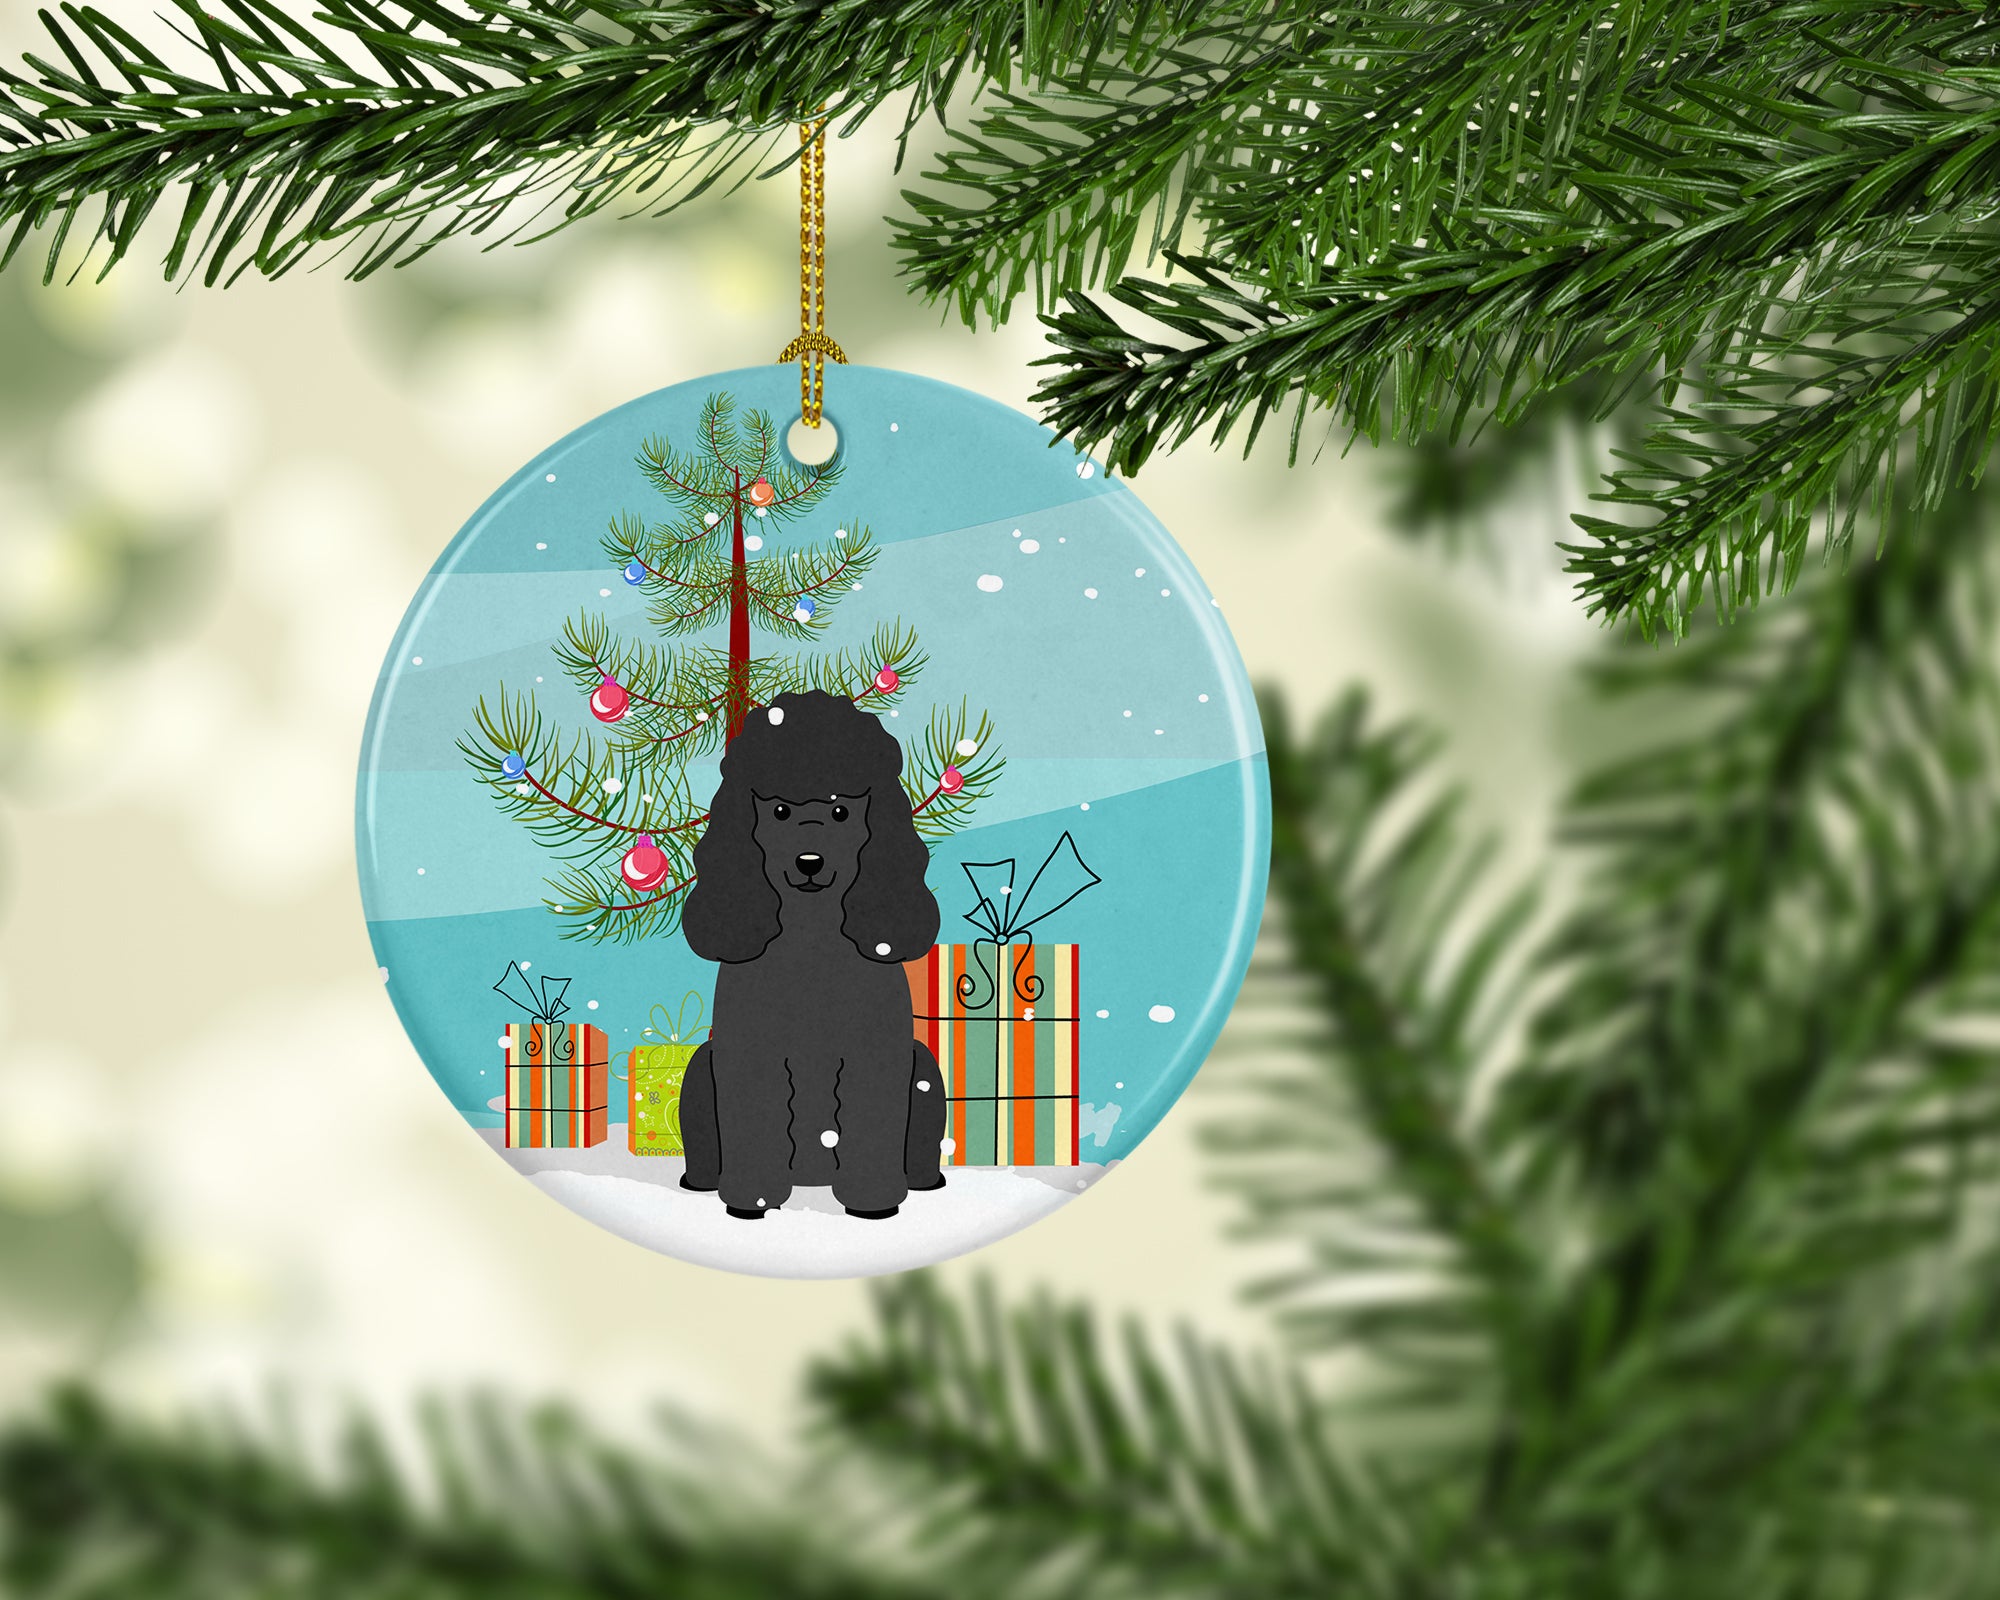 Merry Christmas Tree Poodle Black Ceramic Ornament BB4196CO1 - the-store.com